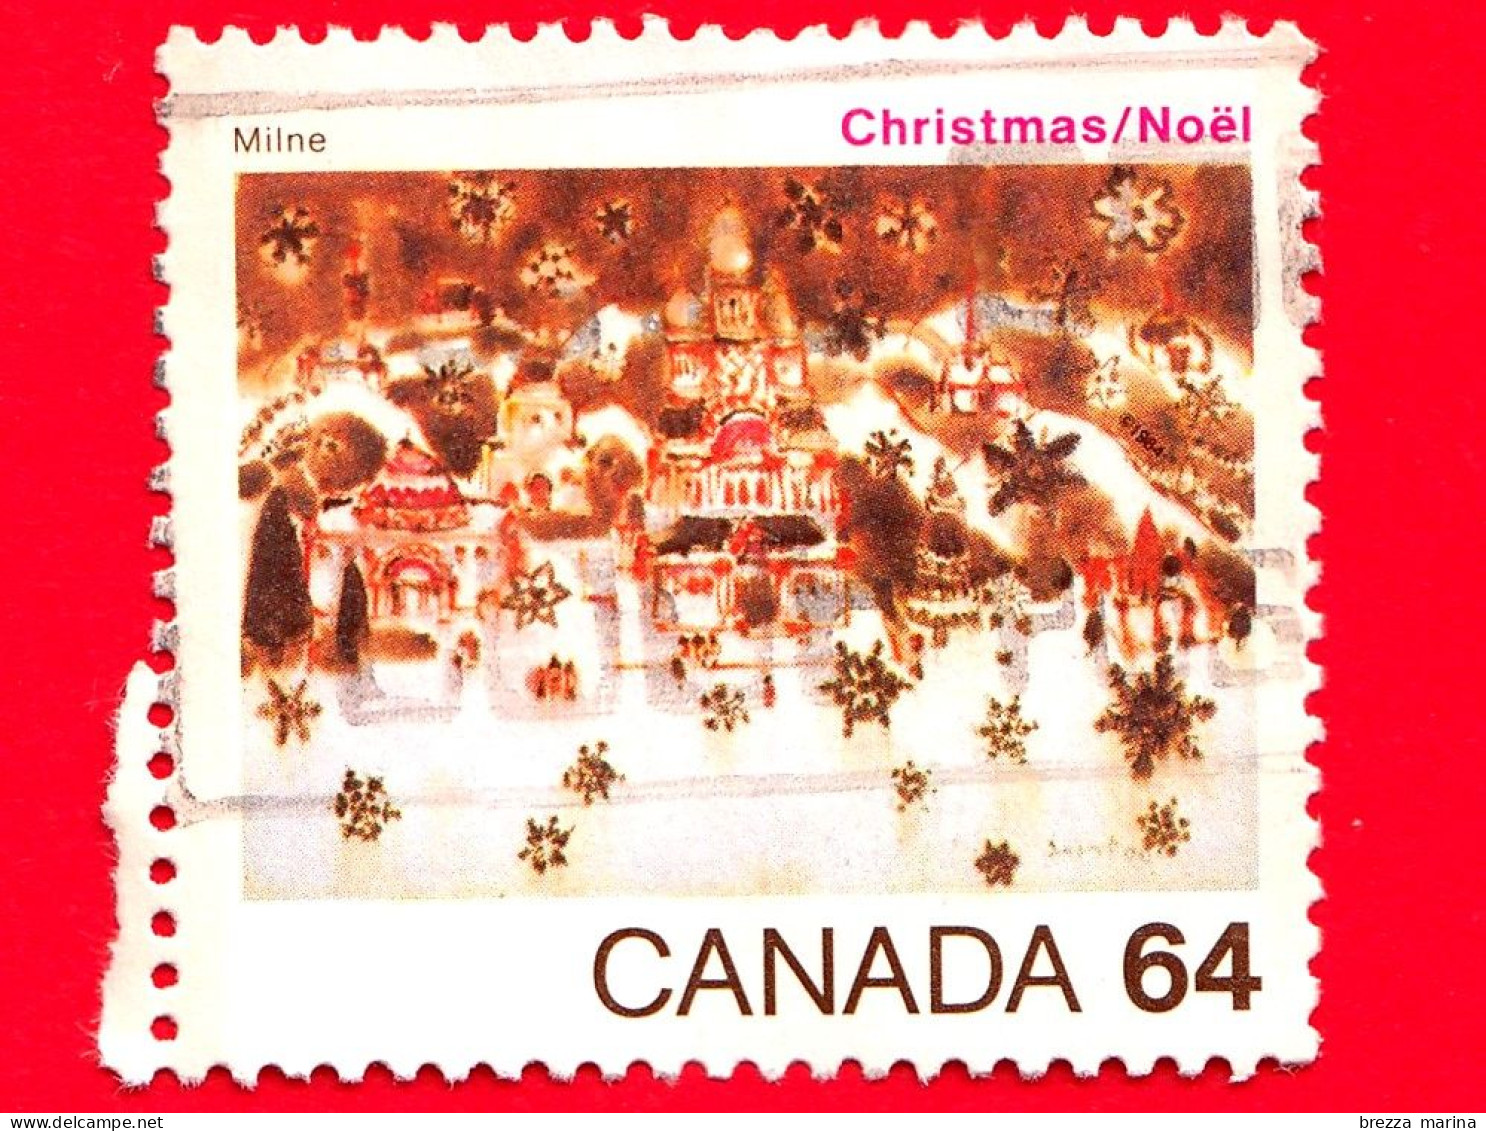 CANADA - Usato - 1984 - Natale - Christmas - Noel - Neve A Betlemme Dipinto Di David Milne - 64 - Usati